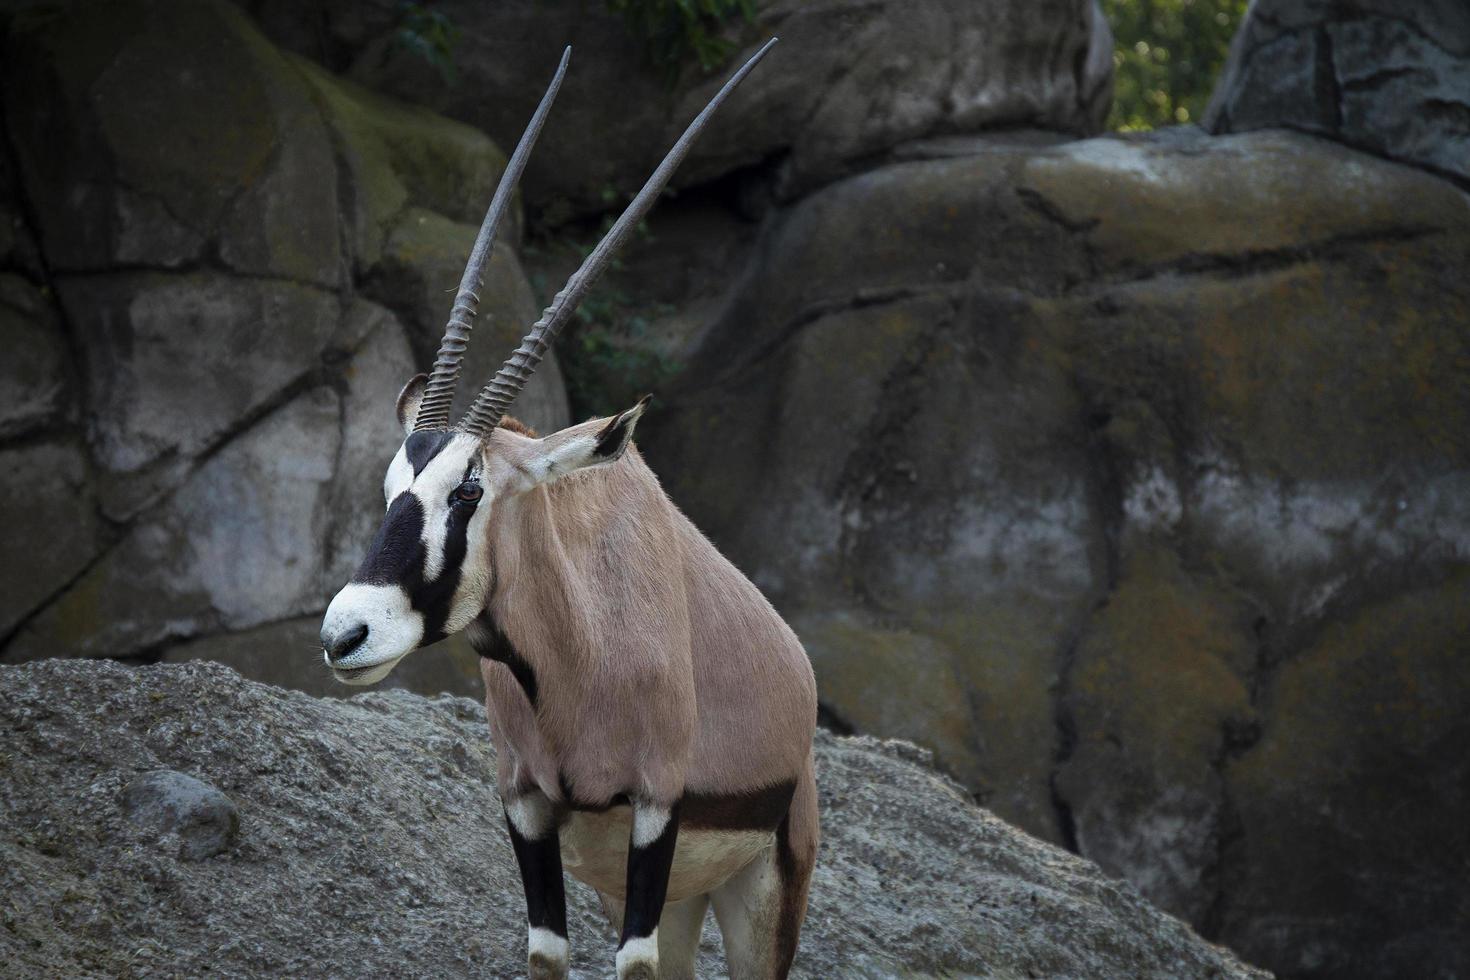 gemsbok antilope in dierentuin foto